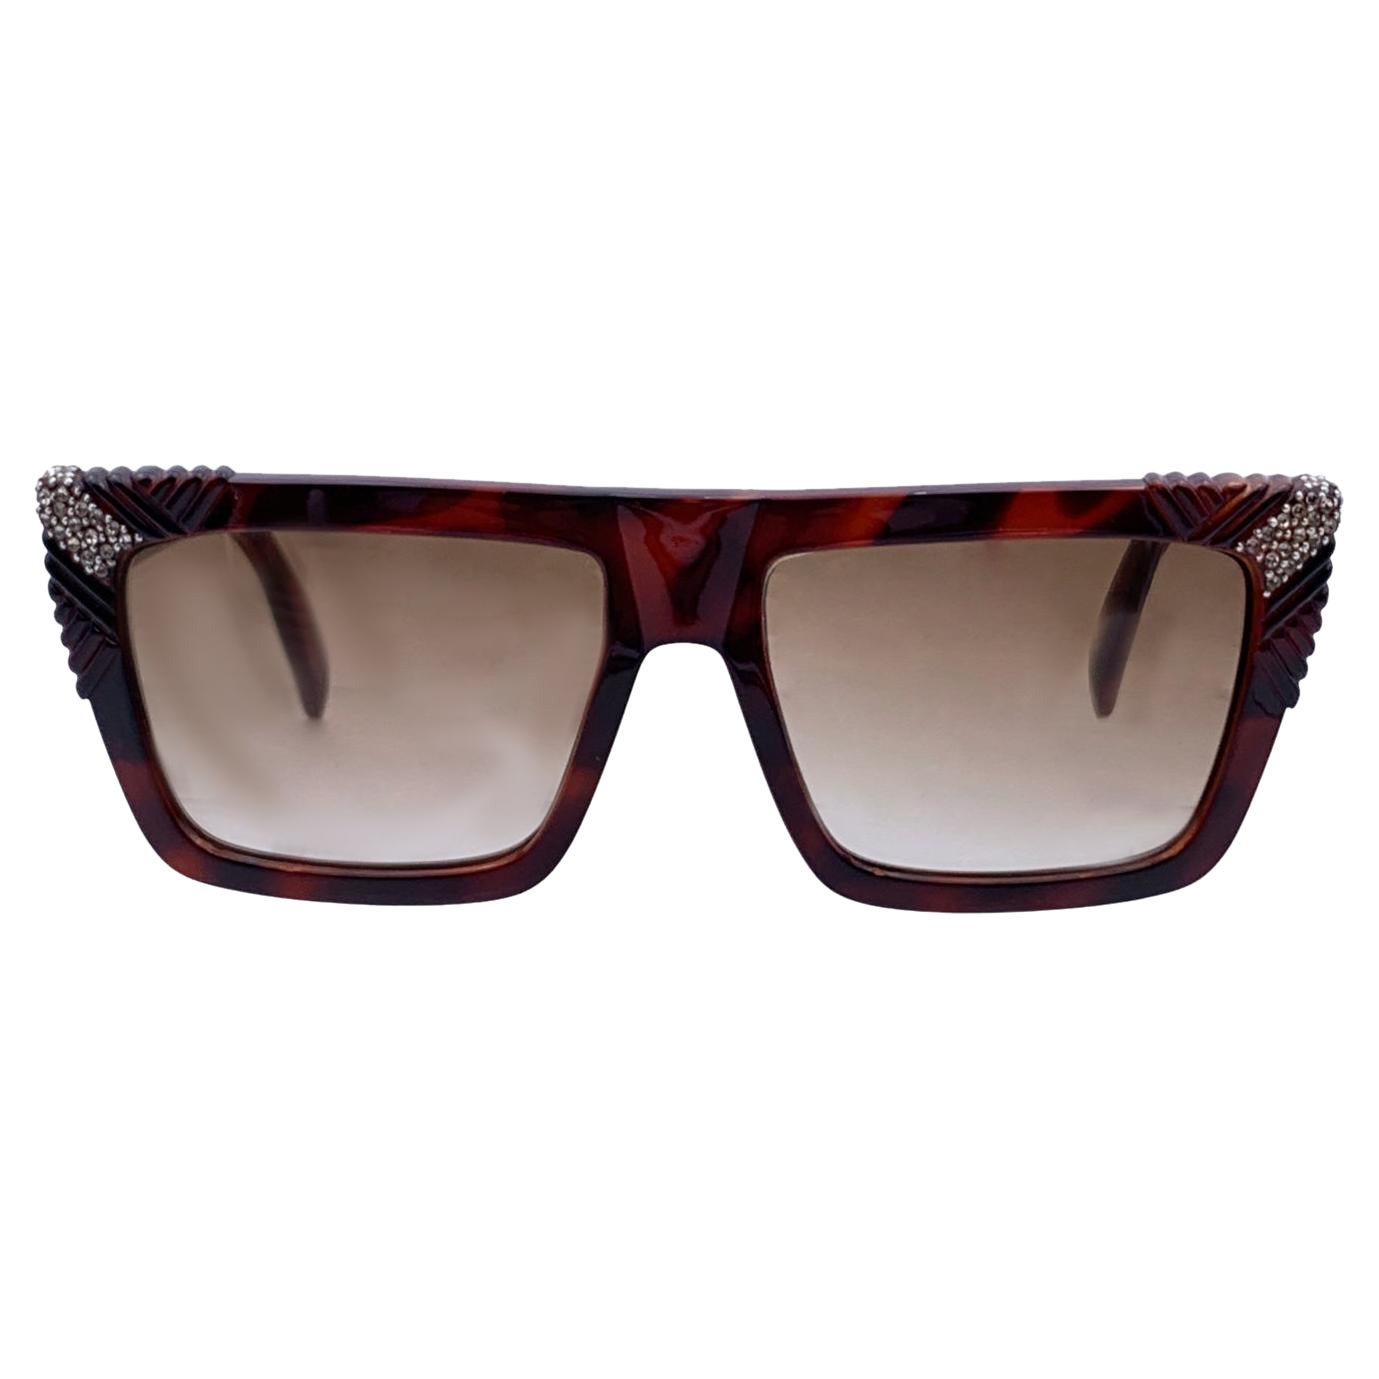 Gianni Versace Vintage Brown Sunglasses Mod. Basix 812 Col.688 For Sale